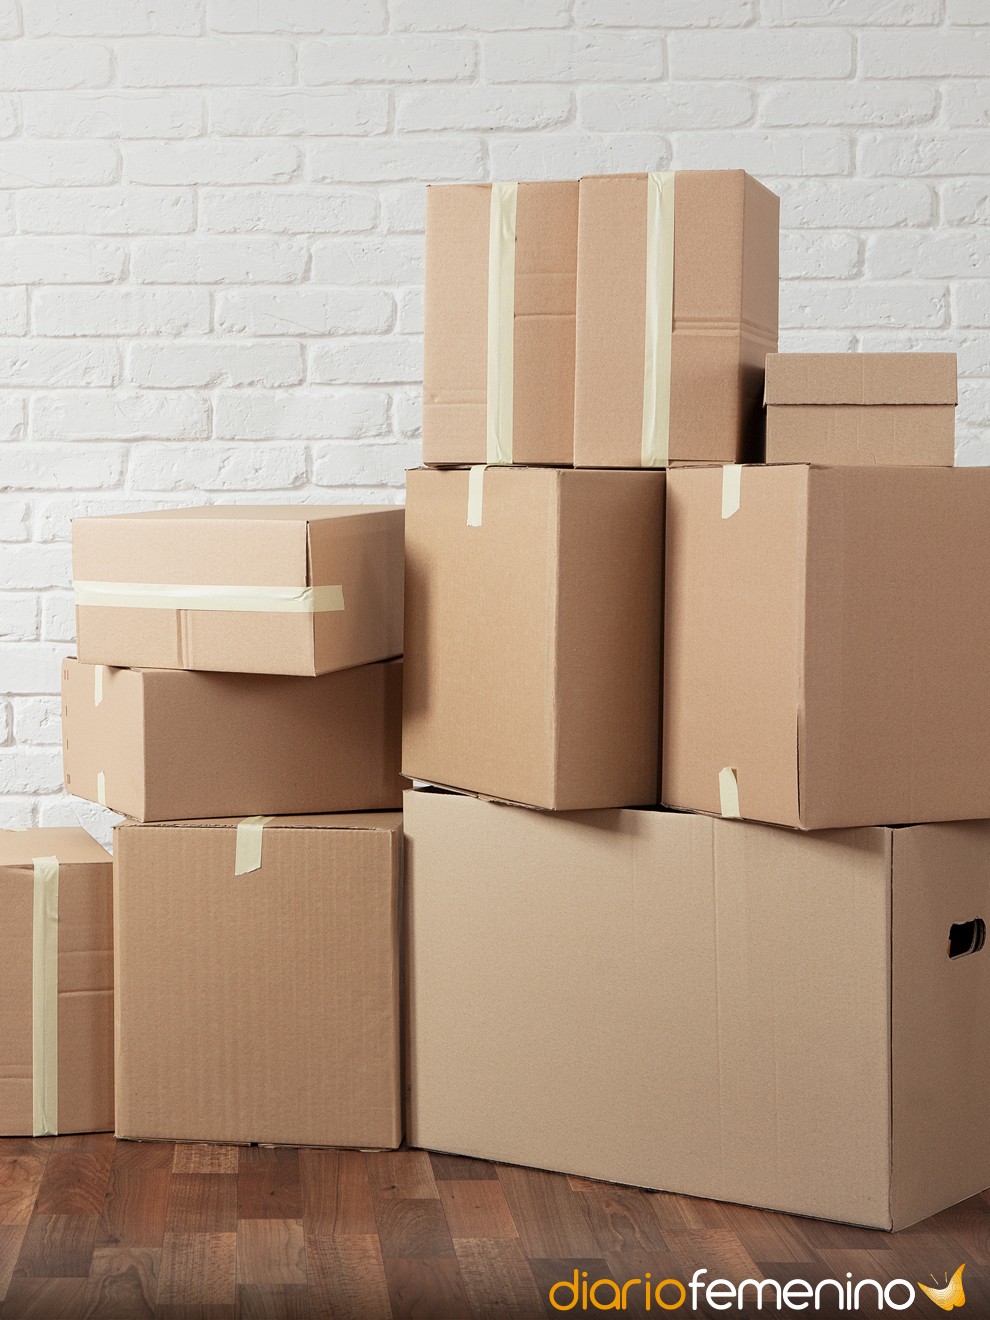 Soñar con cajas de cartón: ¿mudanza, despido o regalos?